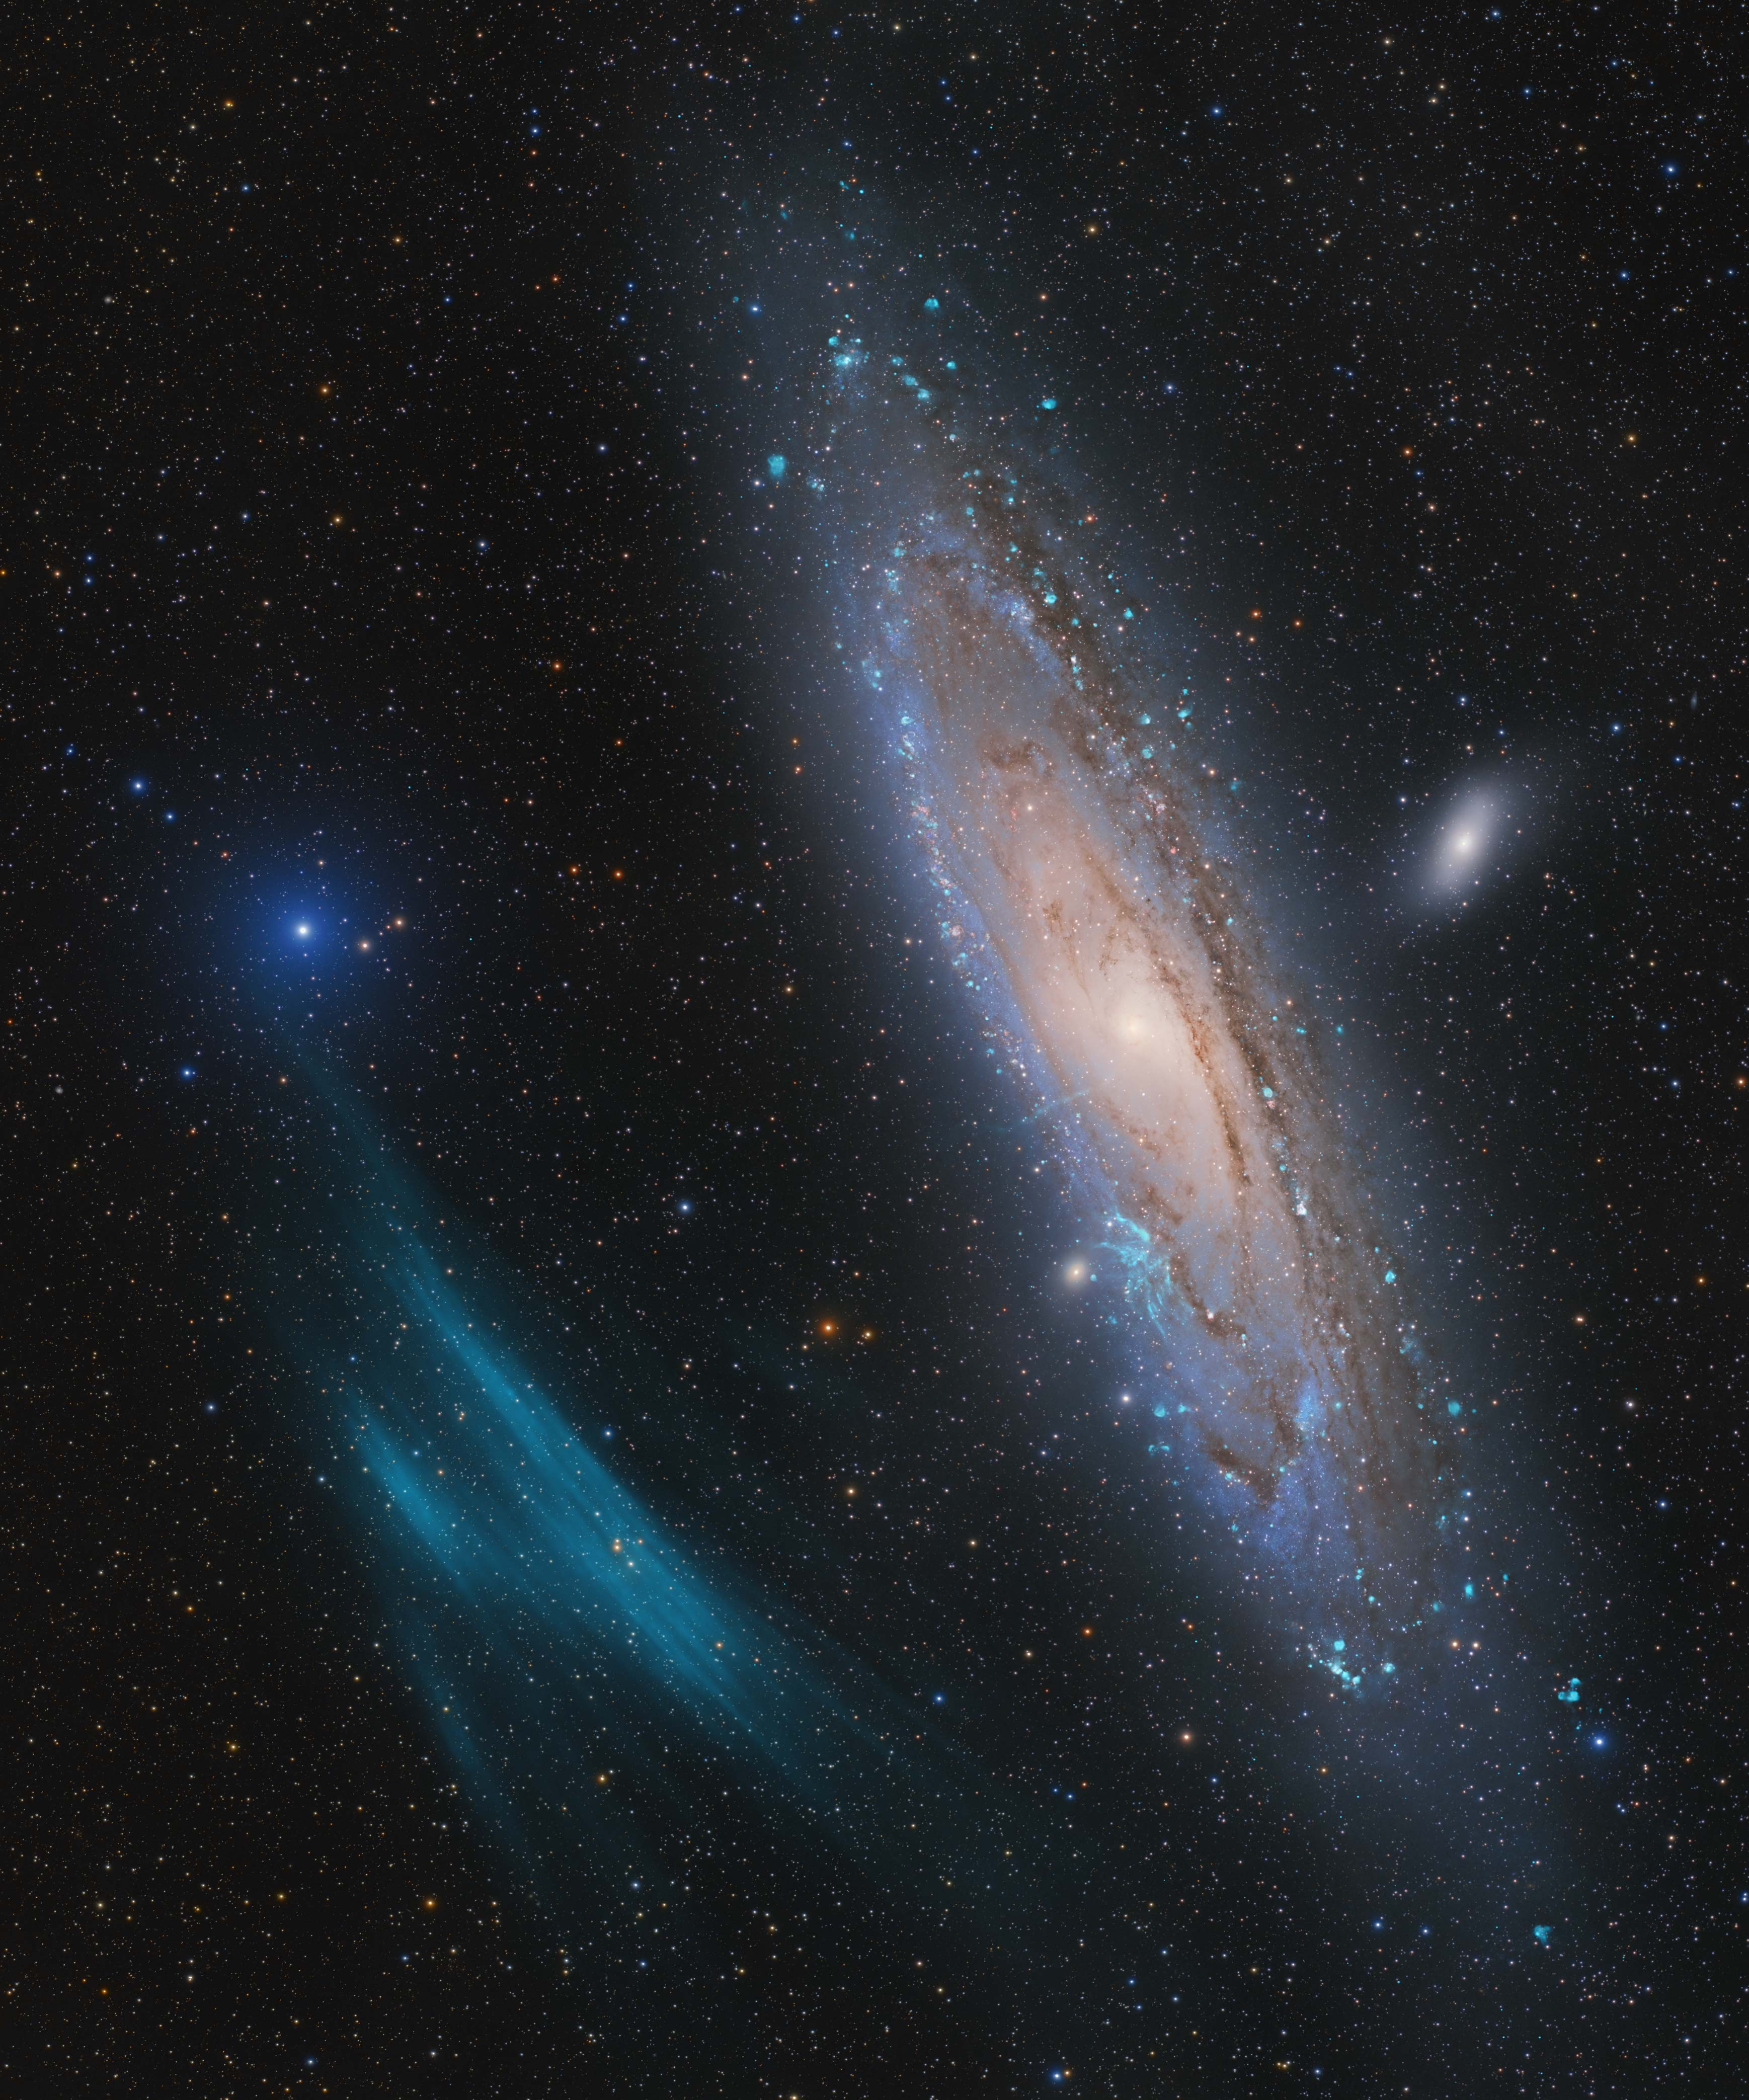 andromeda galaxy through 15 x 70